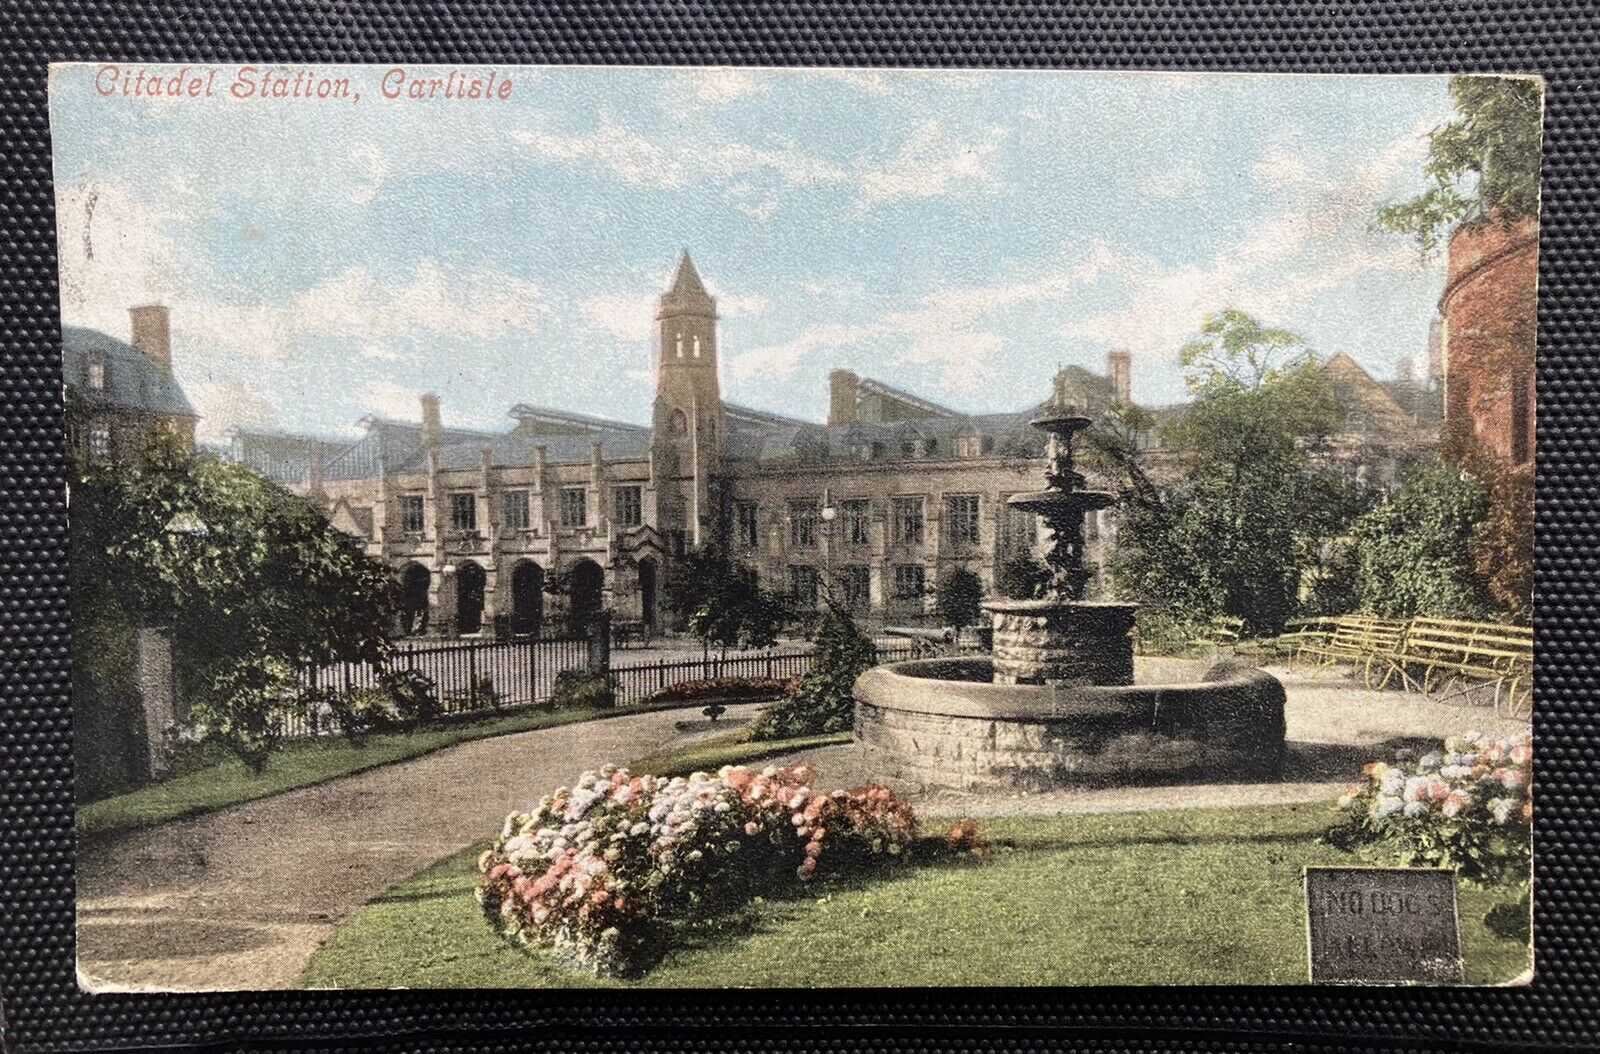 House Clearance - Railway Station - Court Square - Carlisle Citadel - Cumbria - A Vintage 1903 p/c